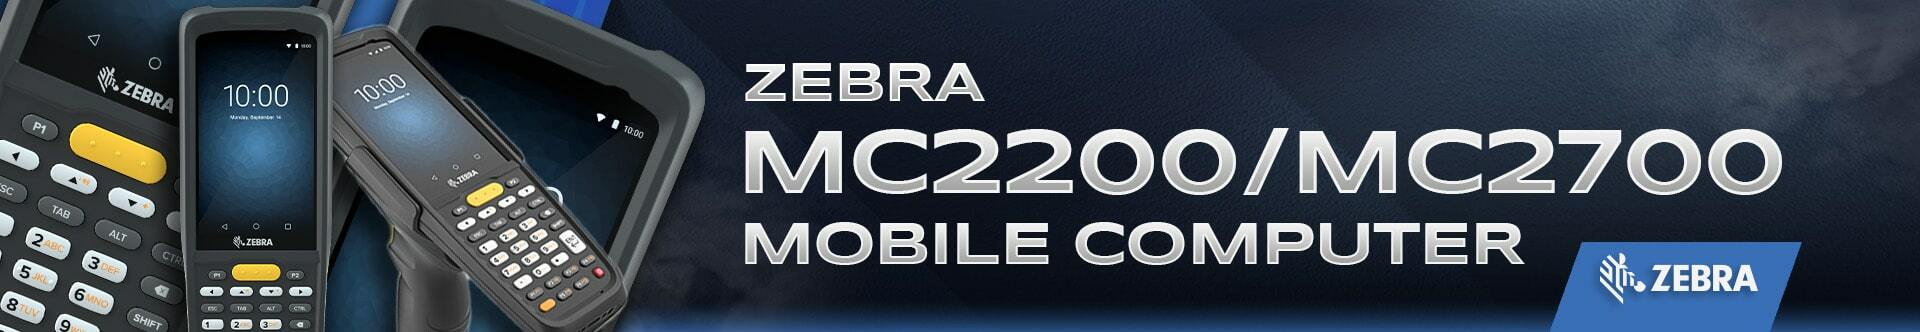 Zebra MC2200/MC2700 Mobile Compuer